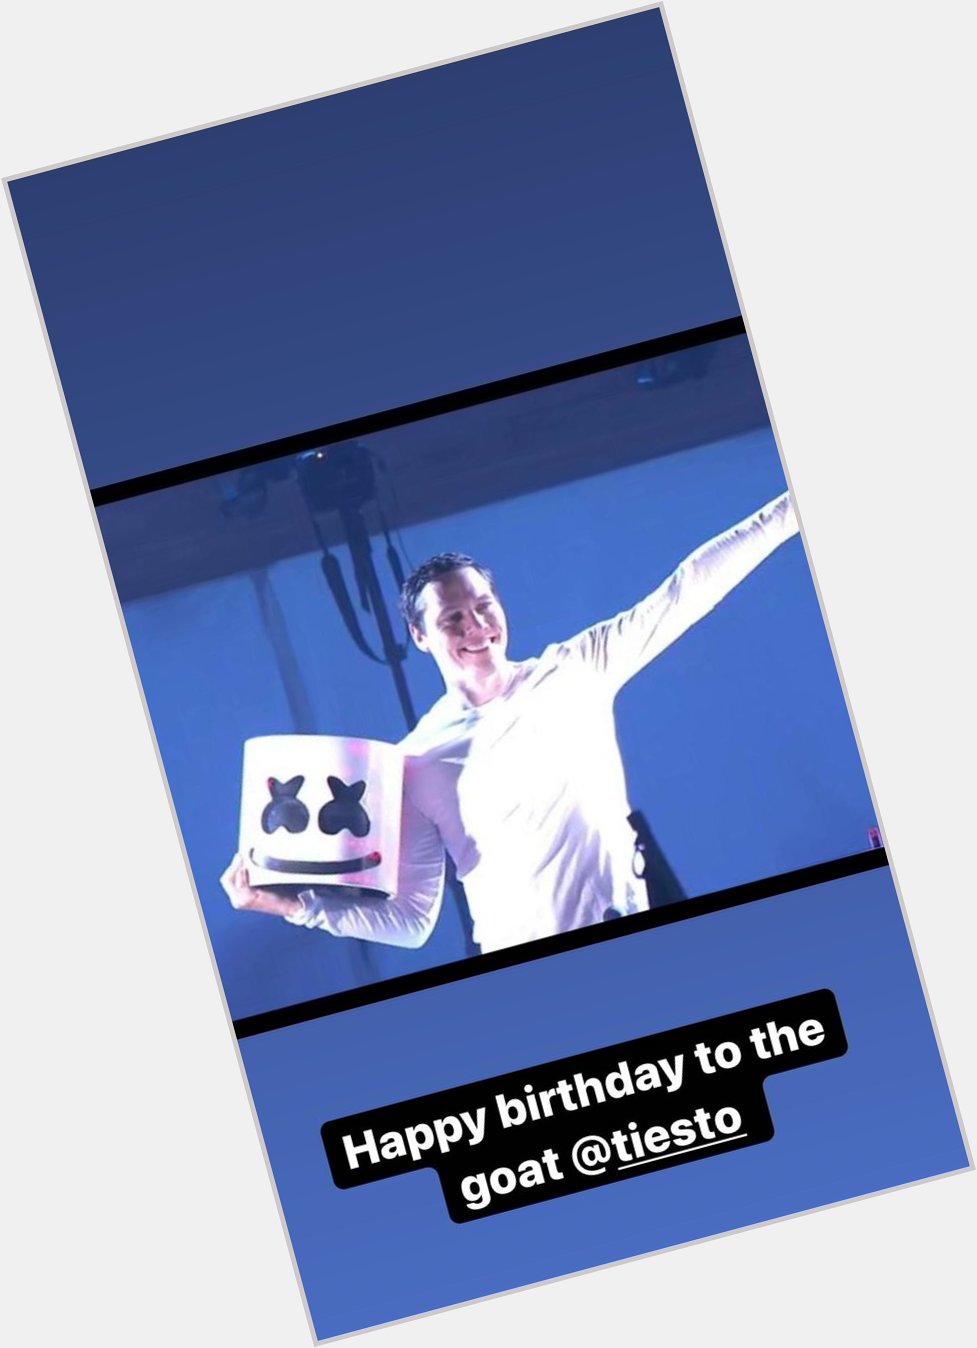  | Marshmello via \Instagram Stories\ wishing Tiesto a happy birthday. 